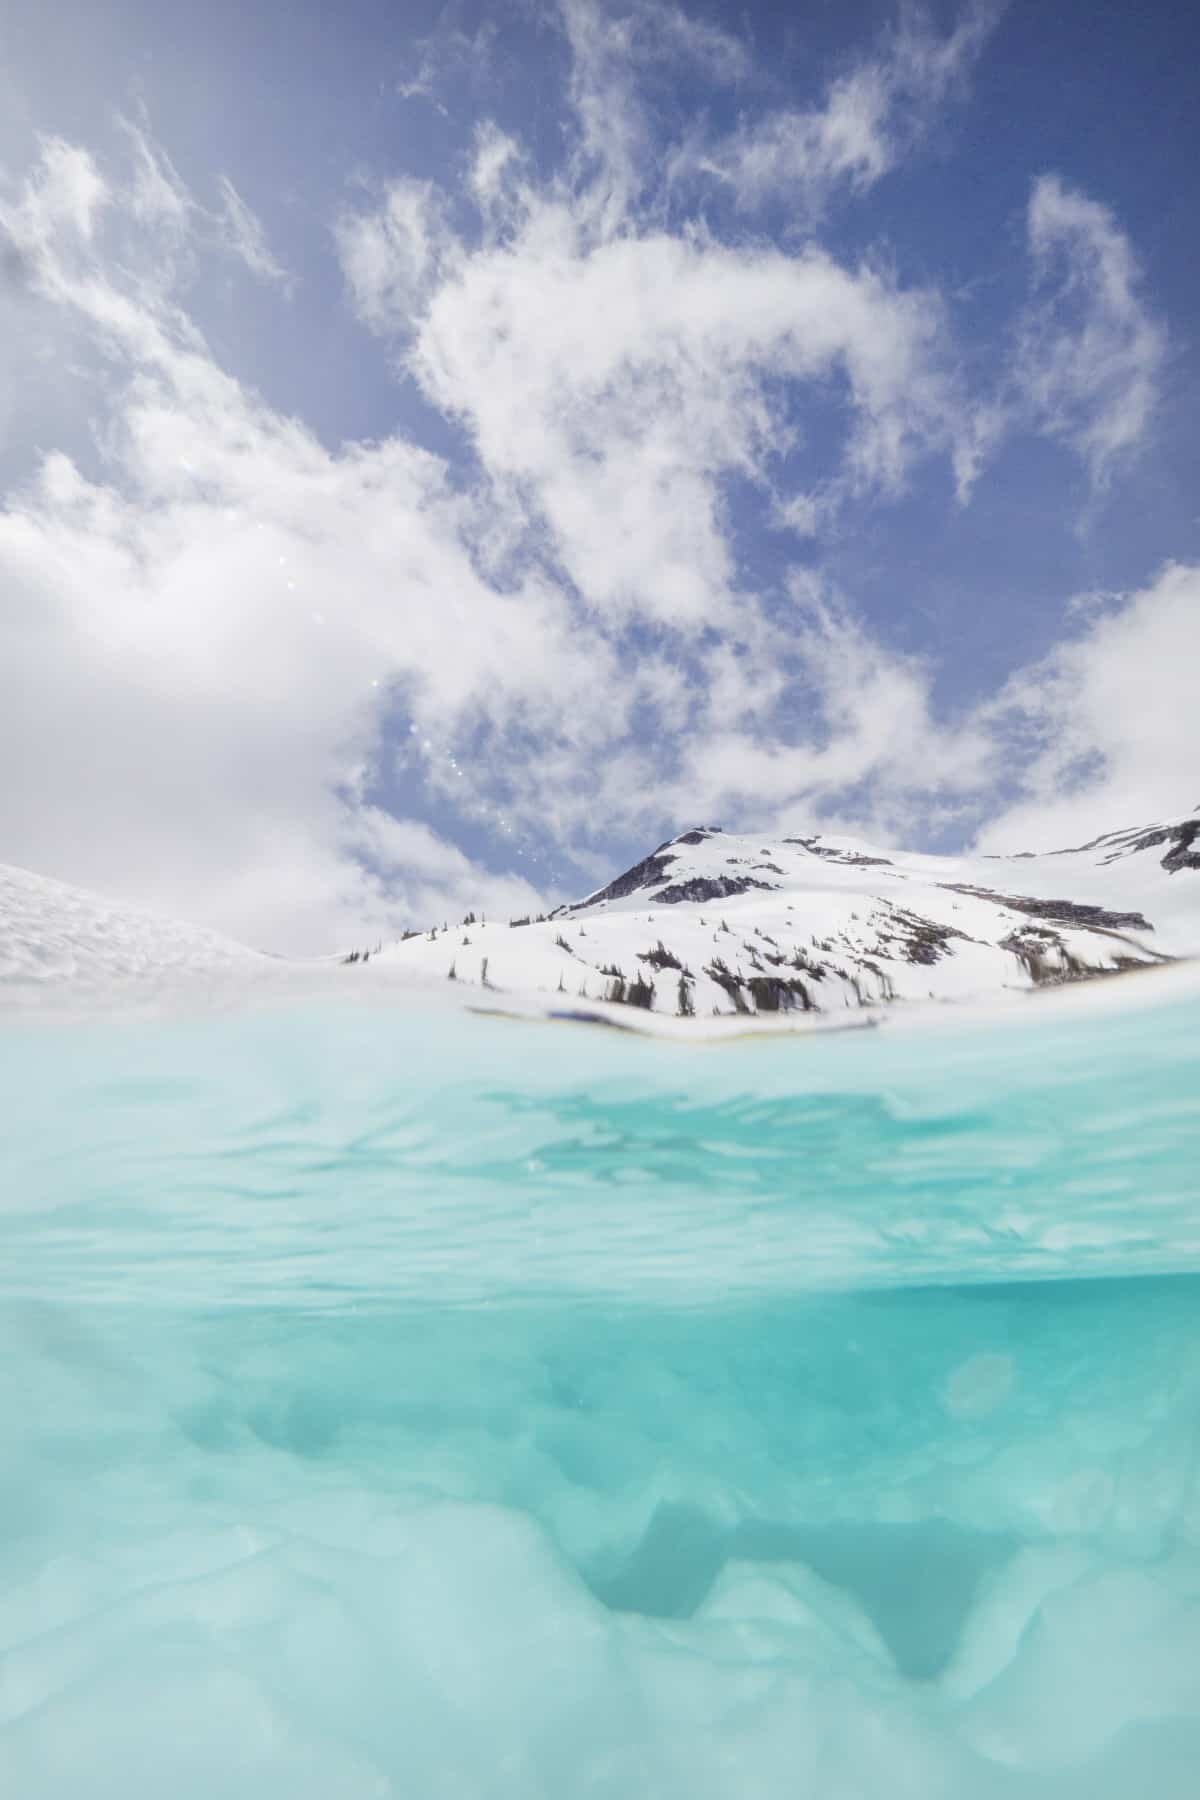 Canada adventure kayaking blue glacial lake streams in British Columbia